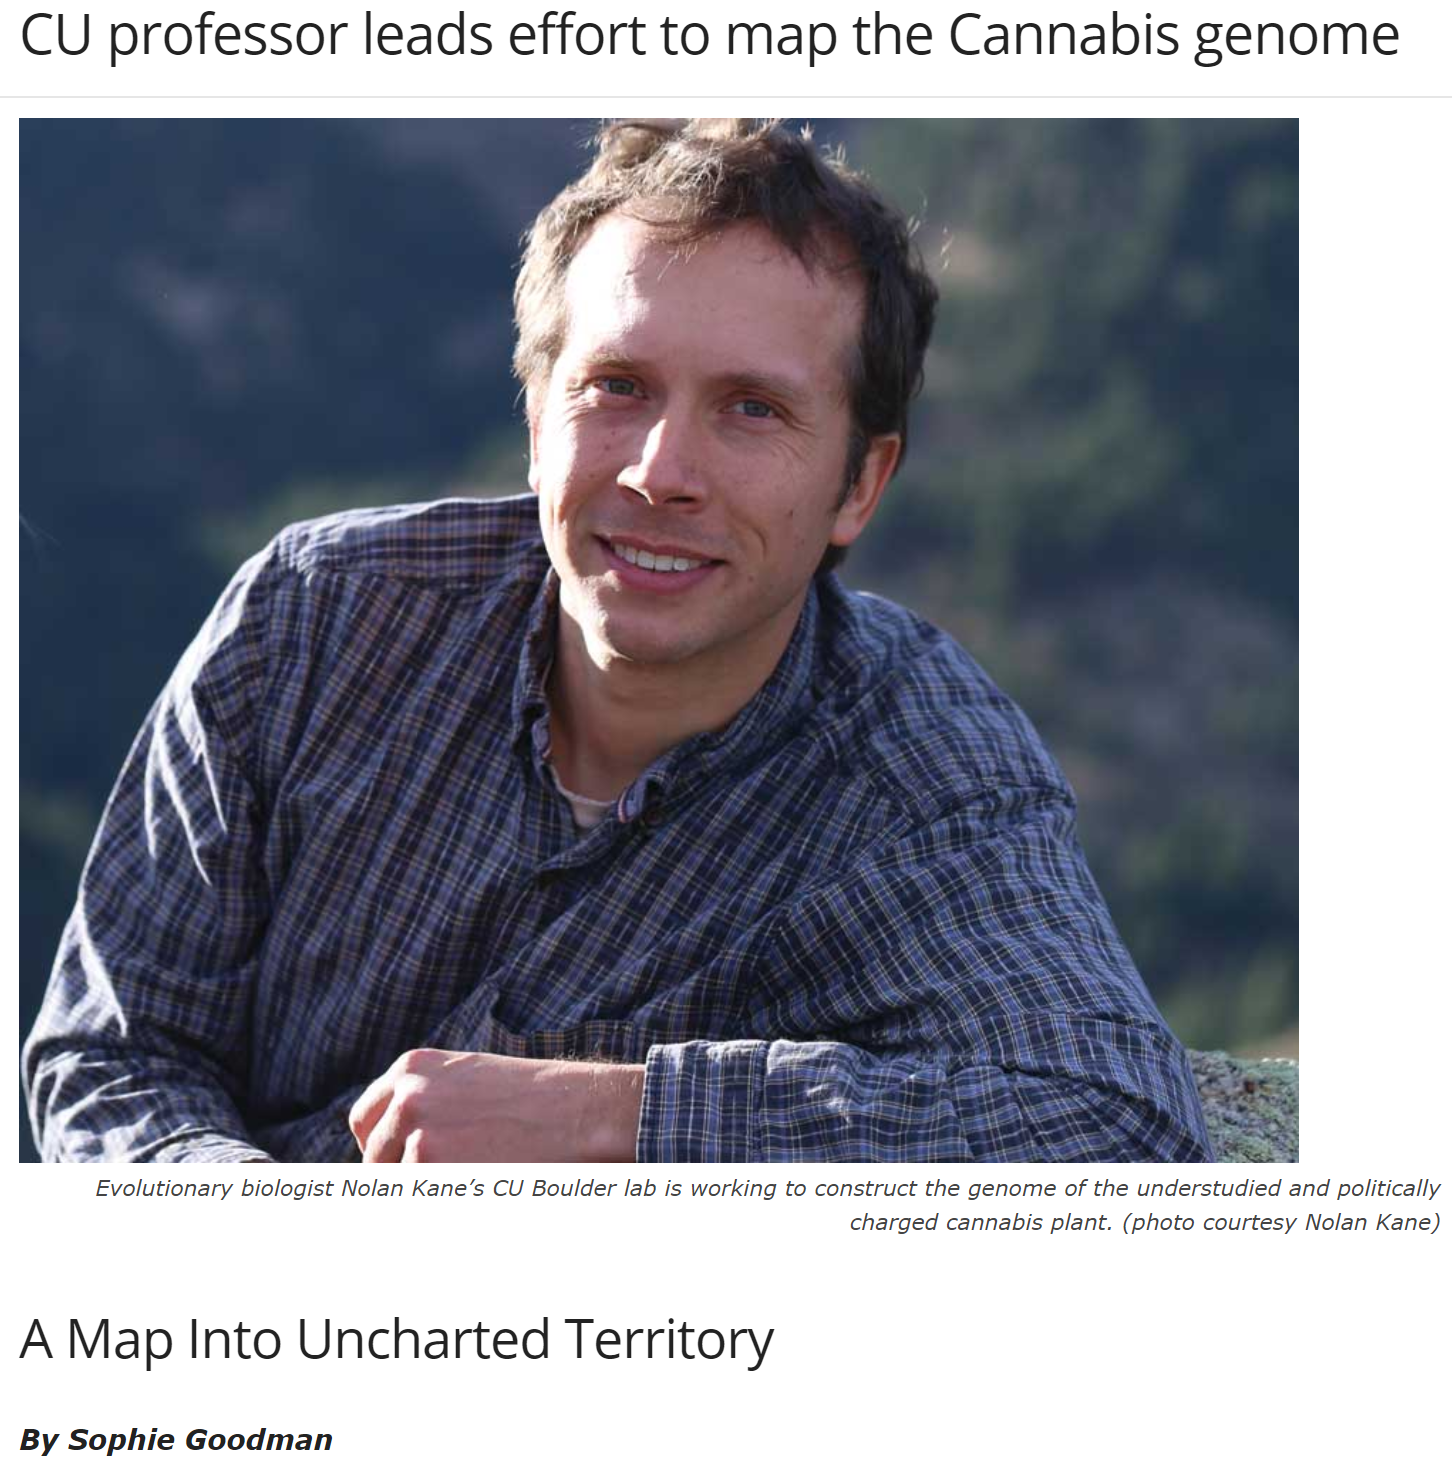 Boulder Magazine, "CU Professor Leads Effort to Map Cannabis Genome"